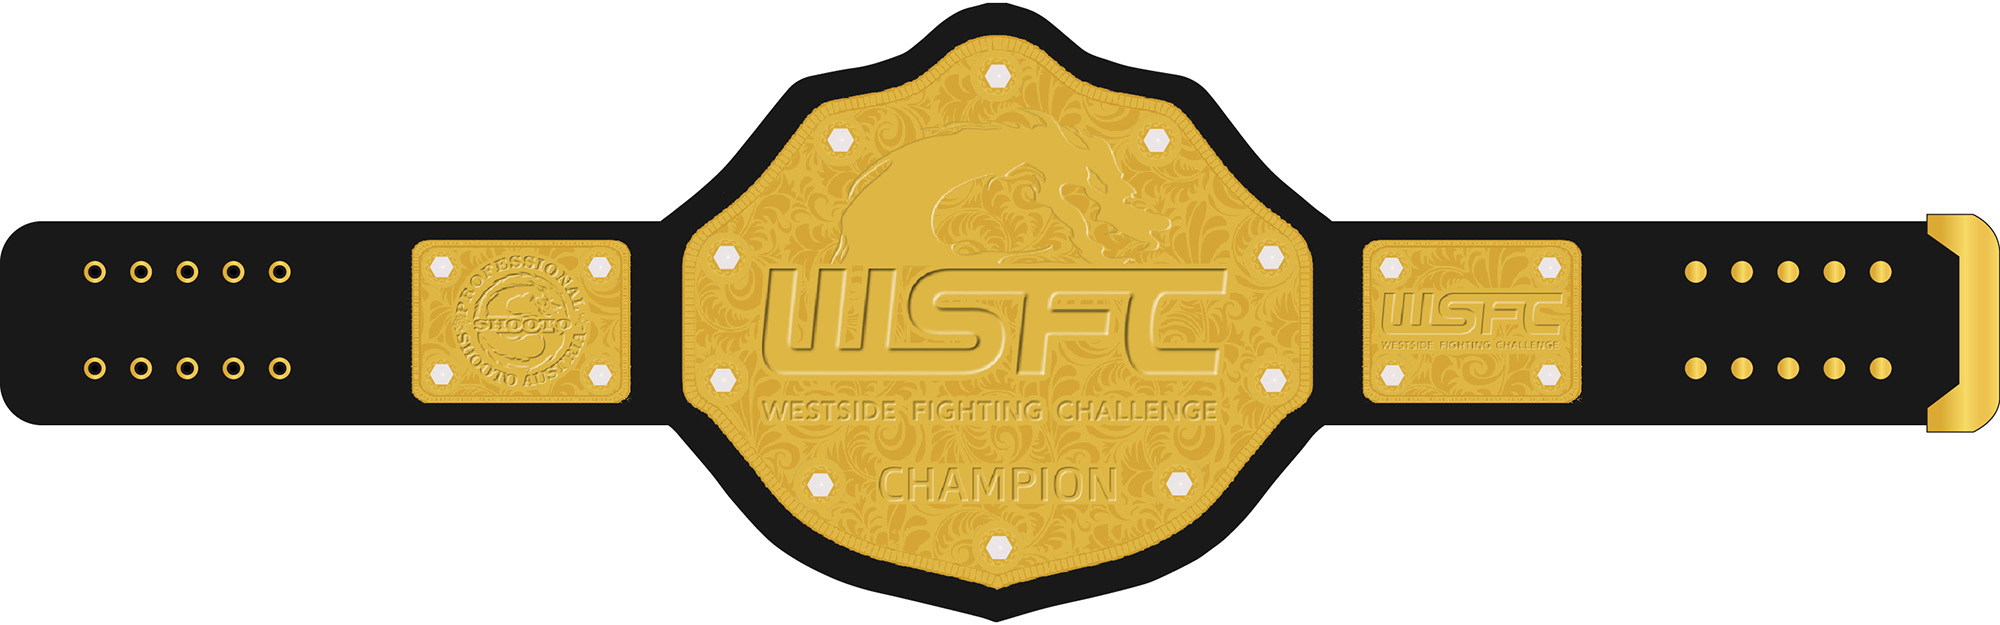 WSFC Westside Fighting Challenge Champion Gürtel